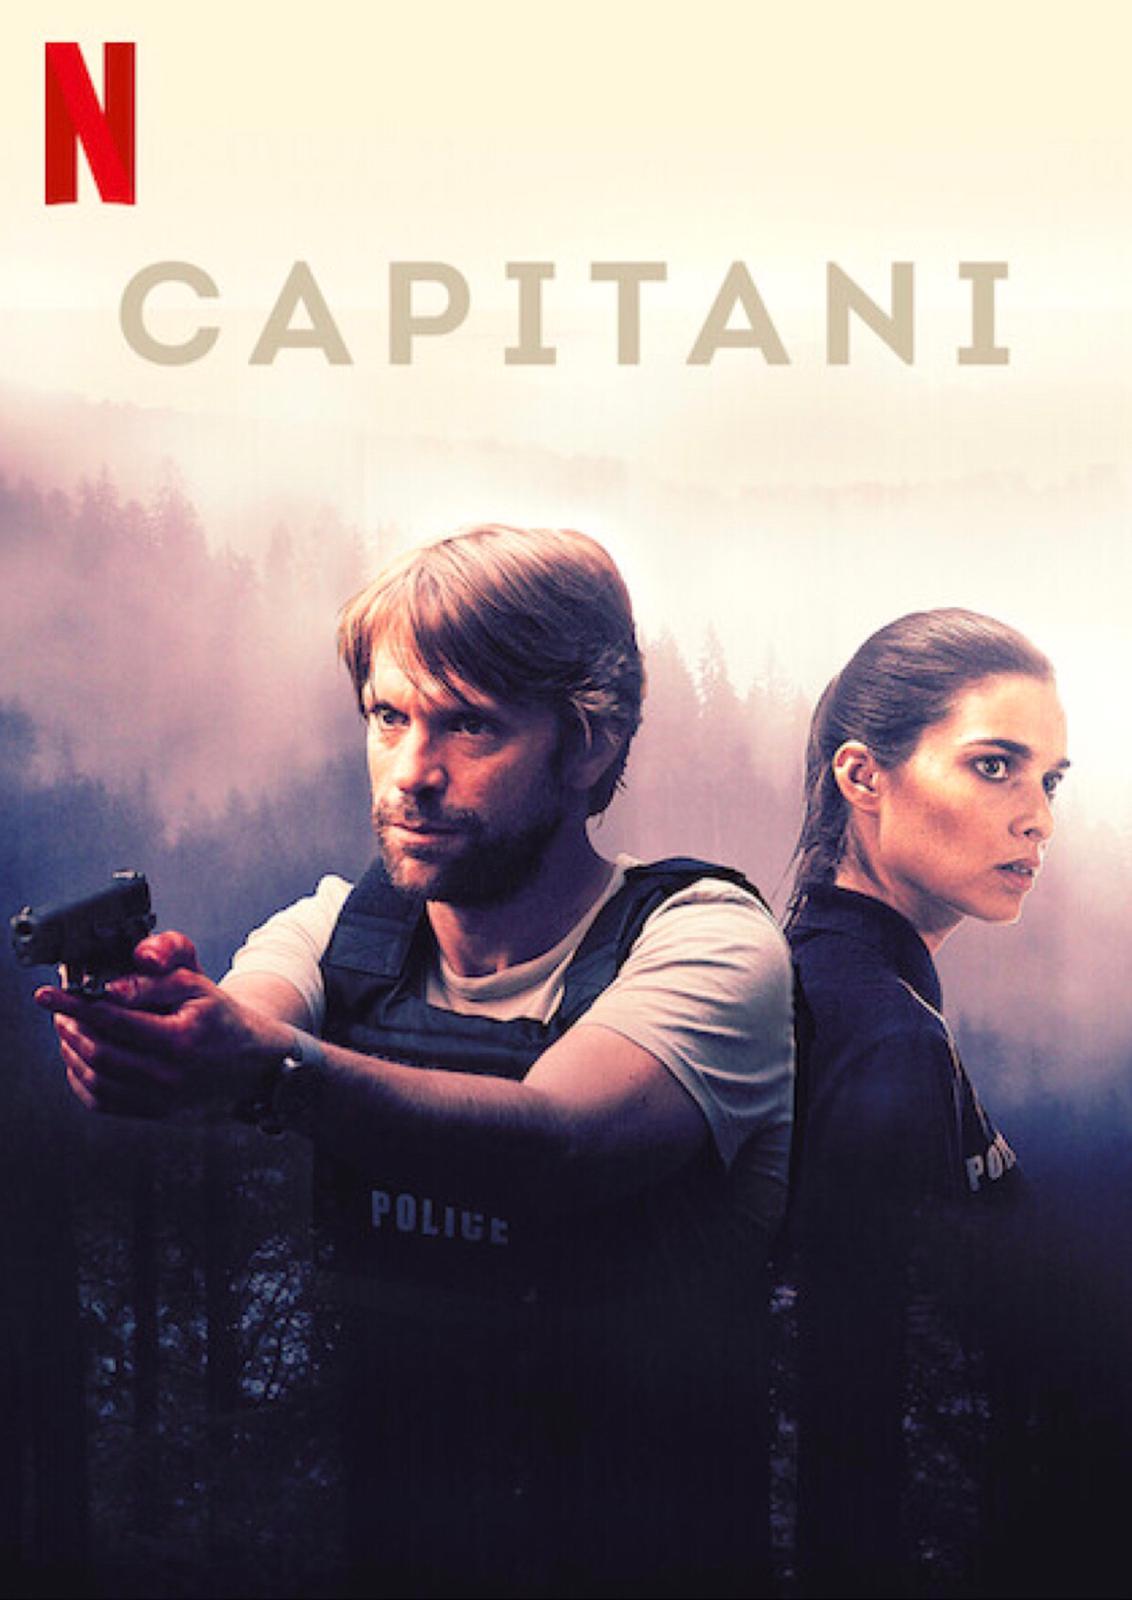 Is “Capitani Season 2” on Netflix